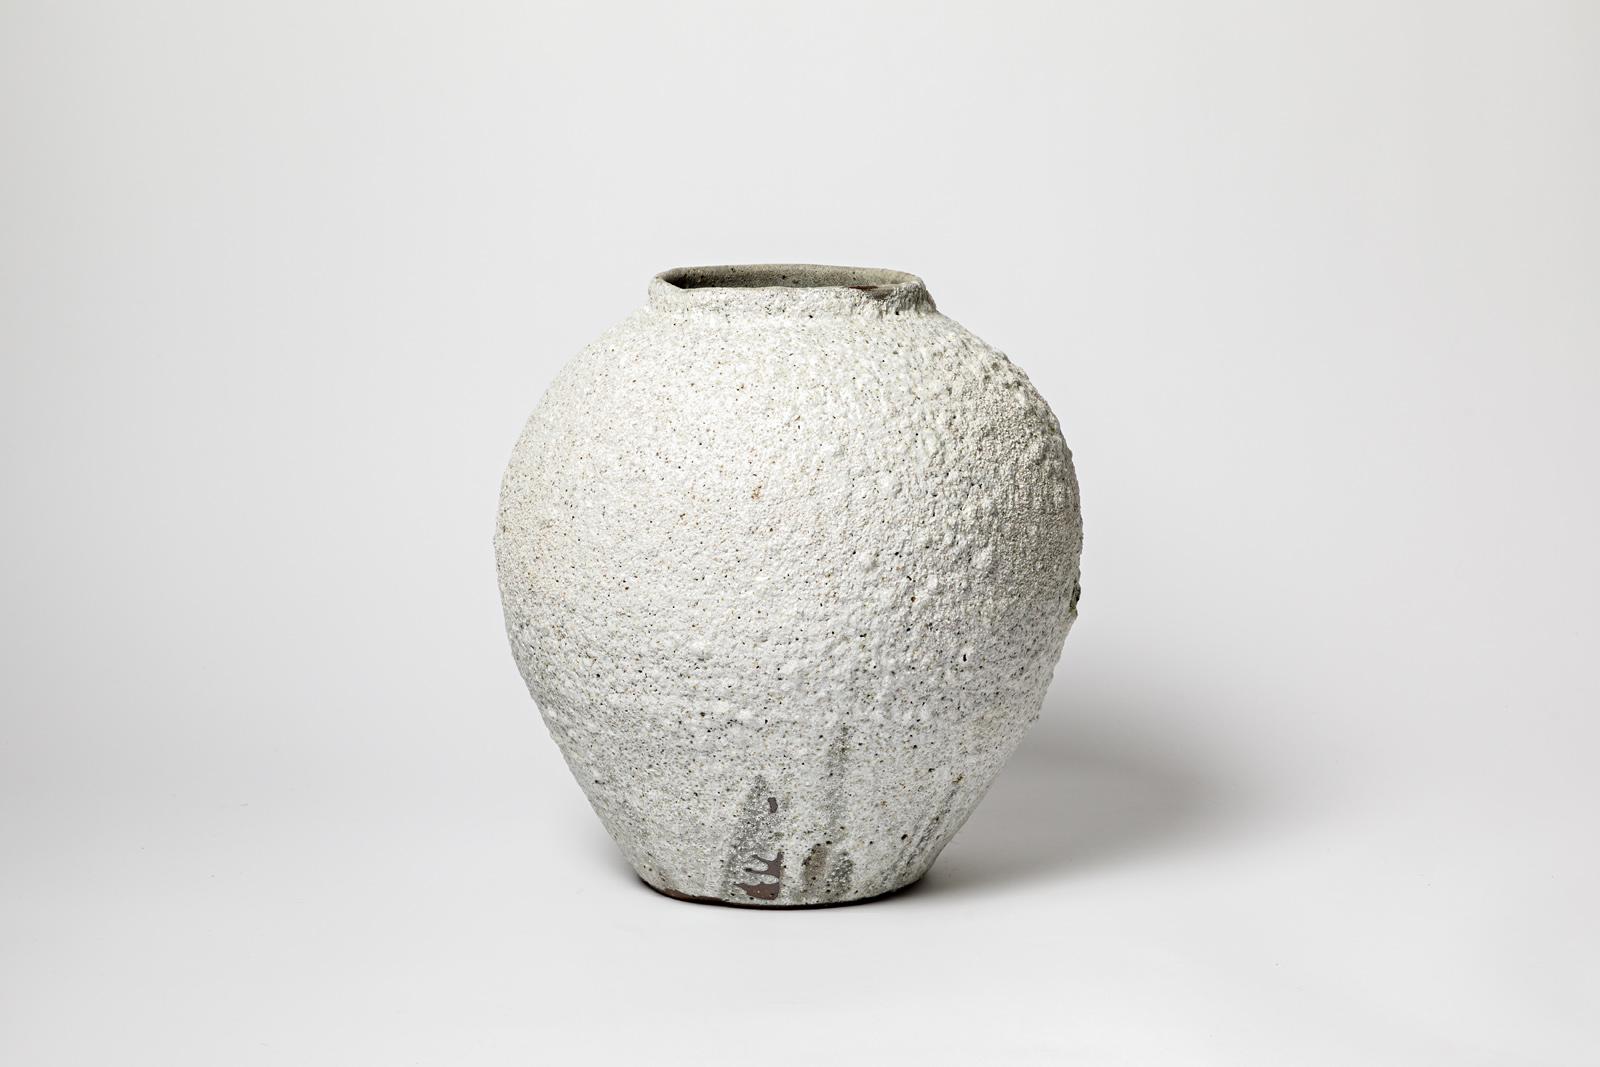 Benoit Audureau

Large stoneware ceramic moon vase

White and grey ceramic glazes colors

Unique handmade piece

Signed

Circa 2020

Height 35 cm
Large 30 cm